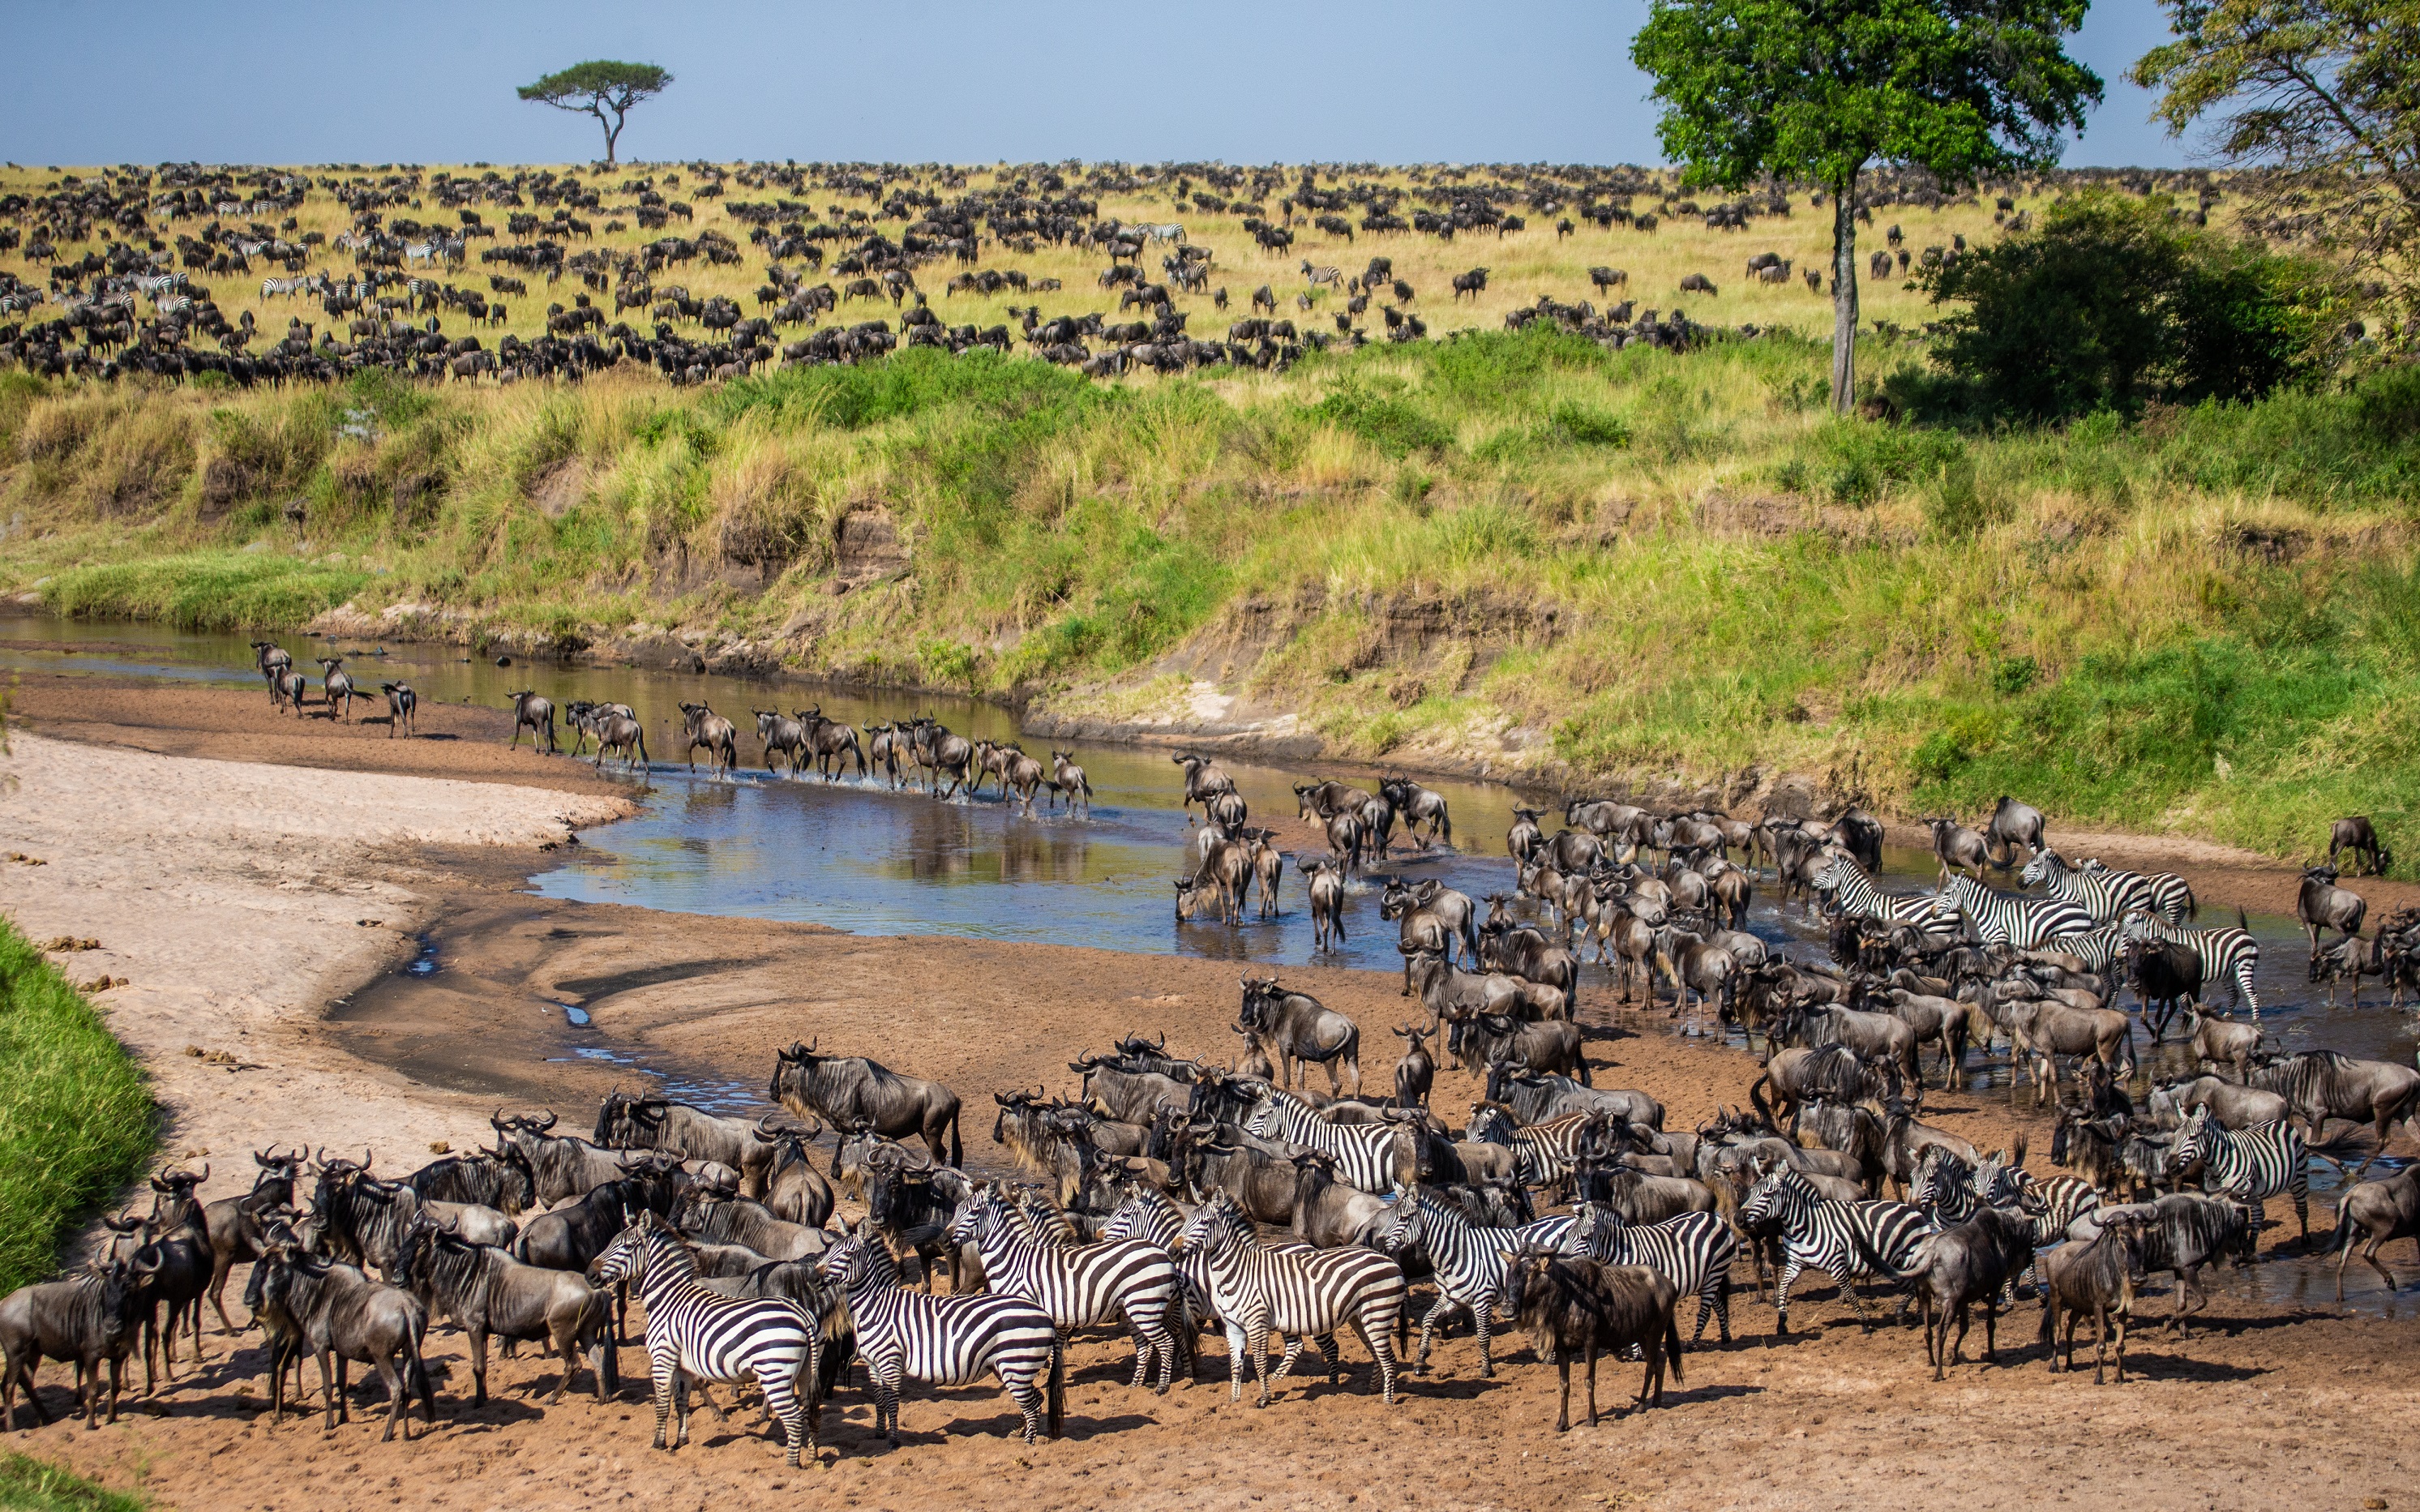 big-herd-of-wildebeest-in-the-savannah-great-migration-kenya-tanzania-maasai-mara-national-park228184245-2.jpeg